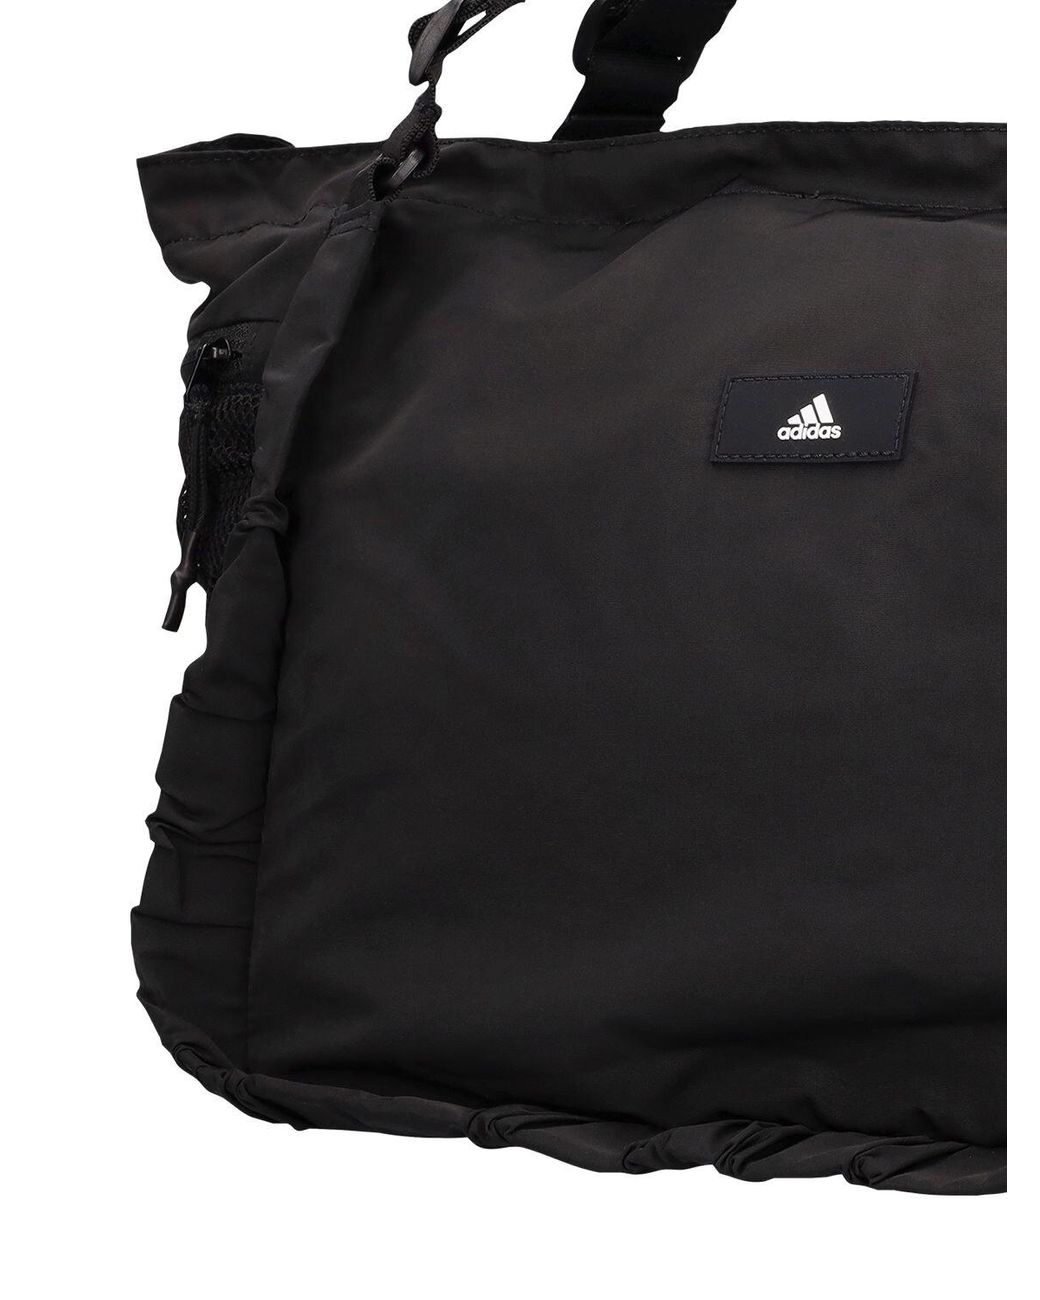 adidas Hot Yoga Tote Bag - Black | adidas India